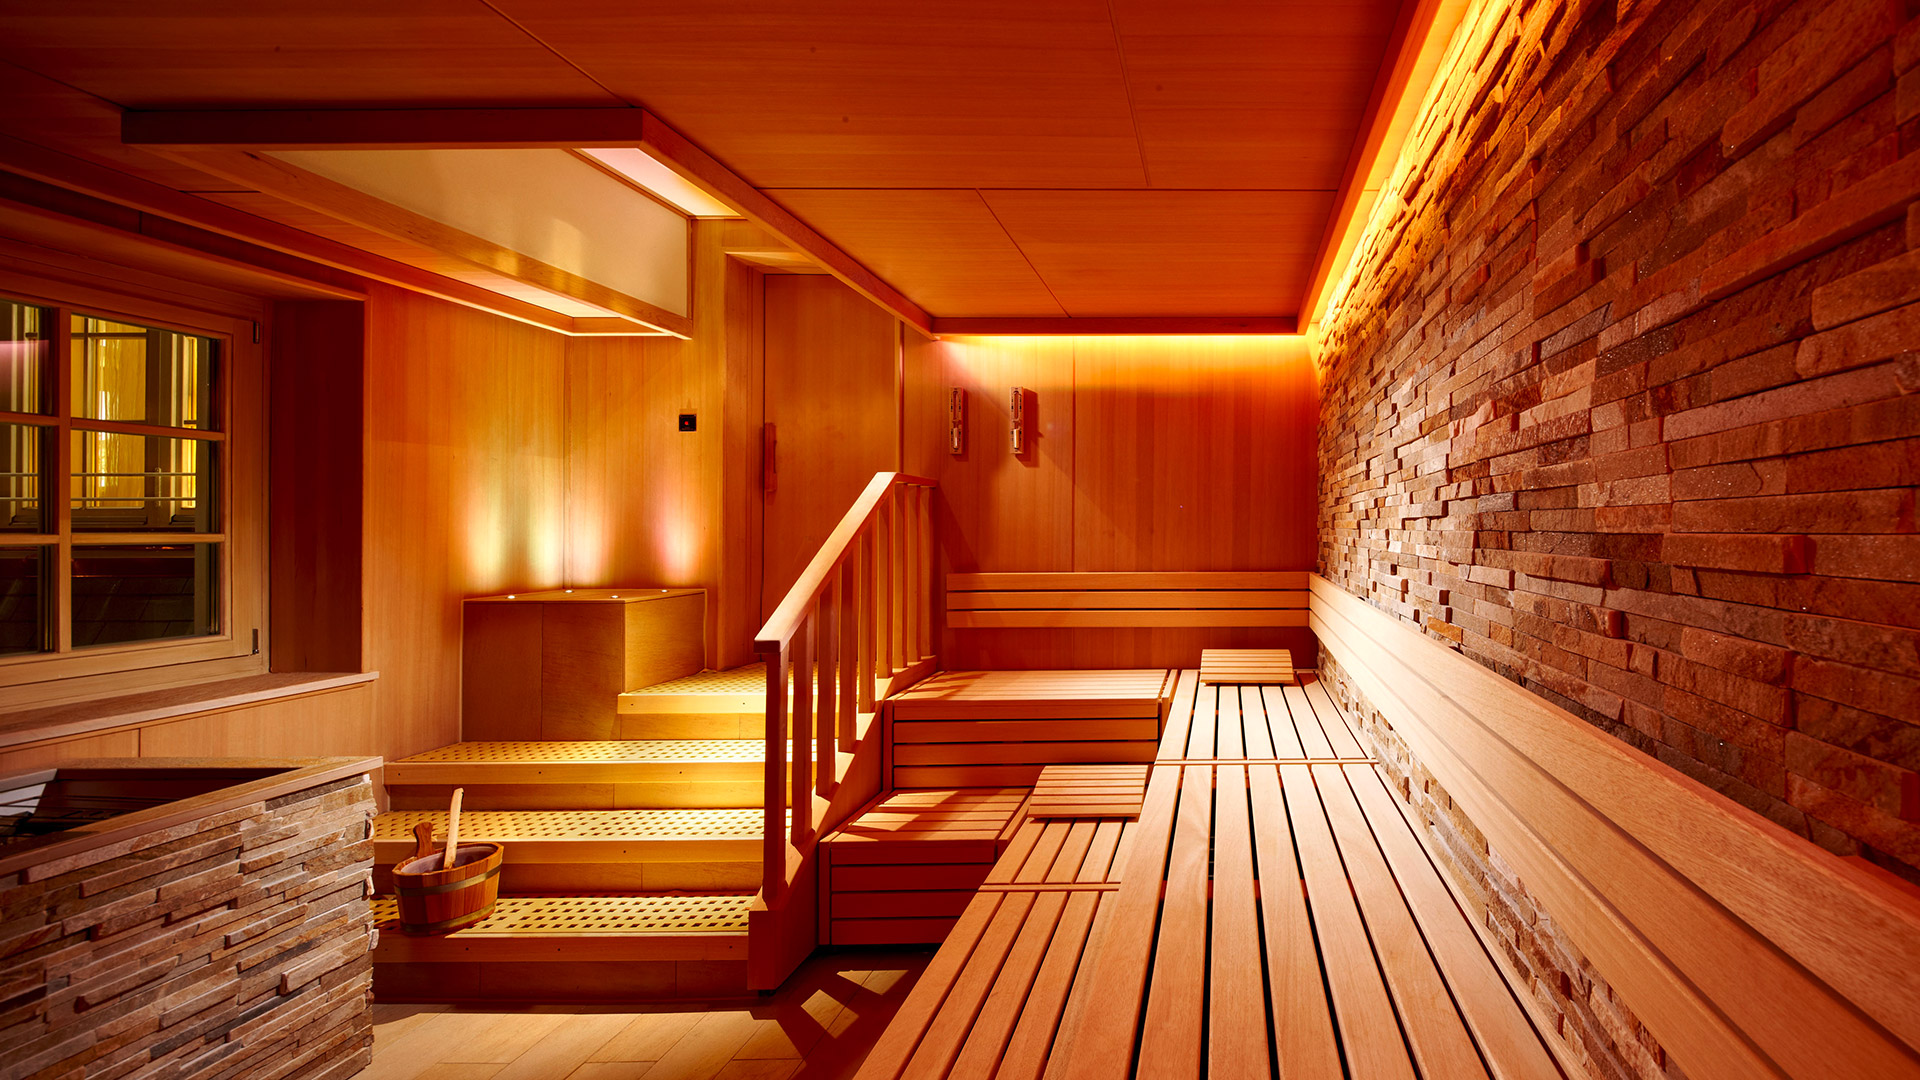 Cum sa amenajezi o sauna pentru acasa?